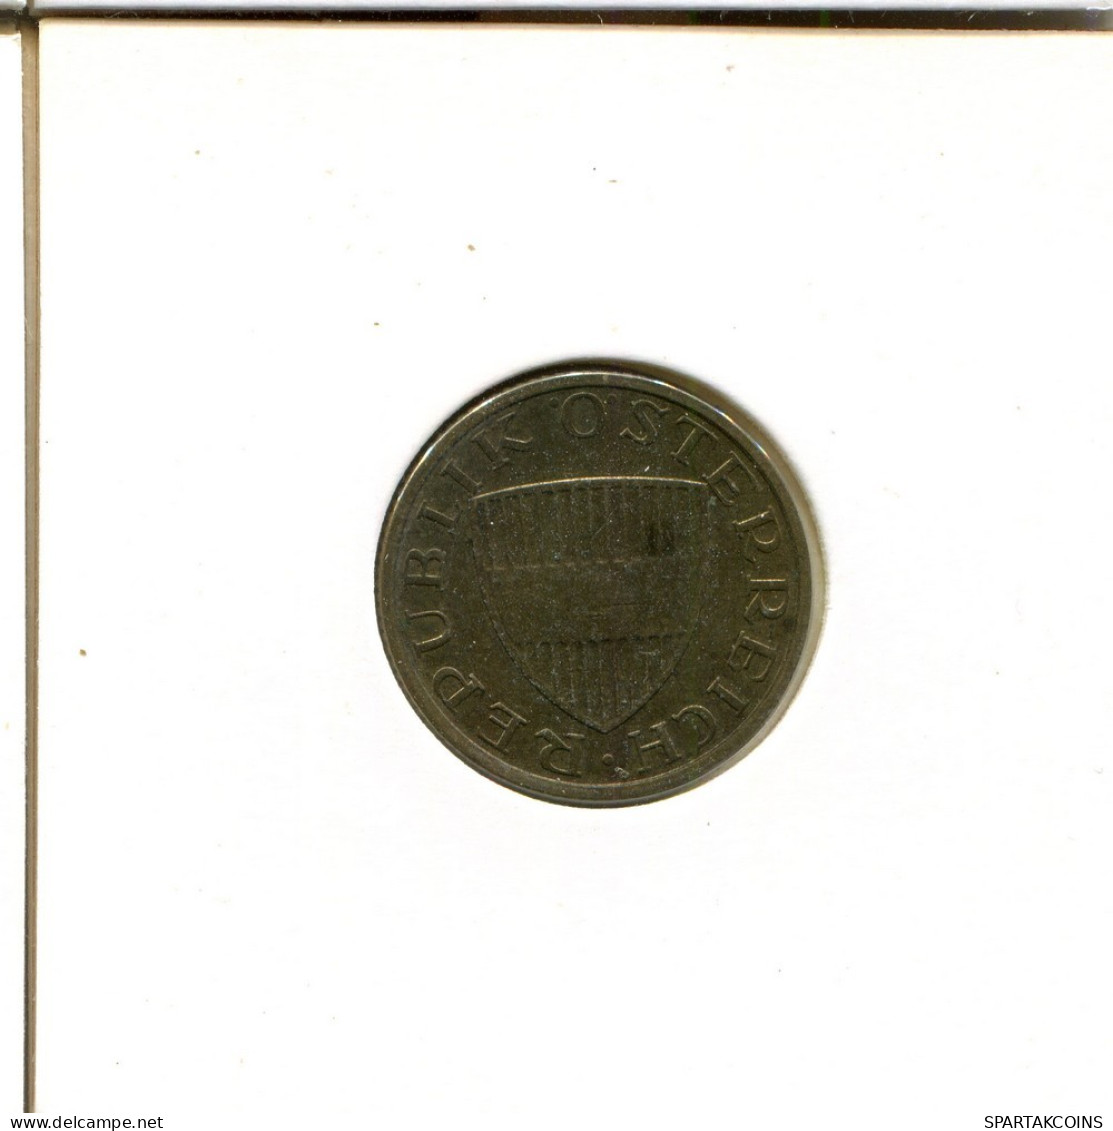 50 GROSCHEN 1978 AUSTRIA Moneda #AT601.E.A - Autriche